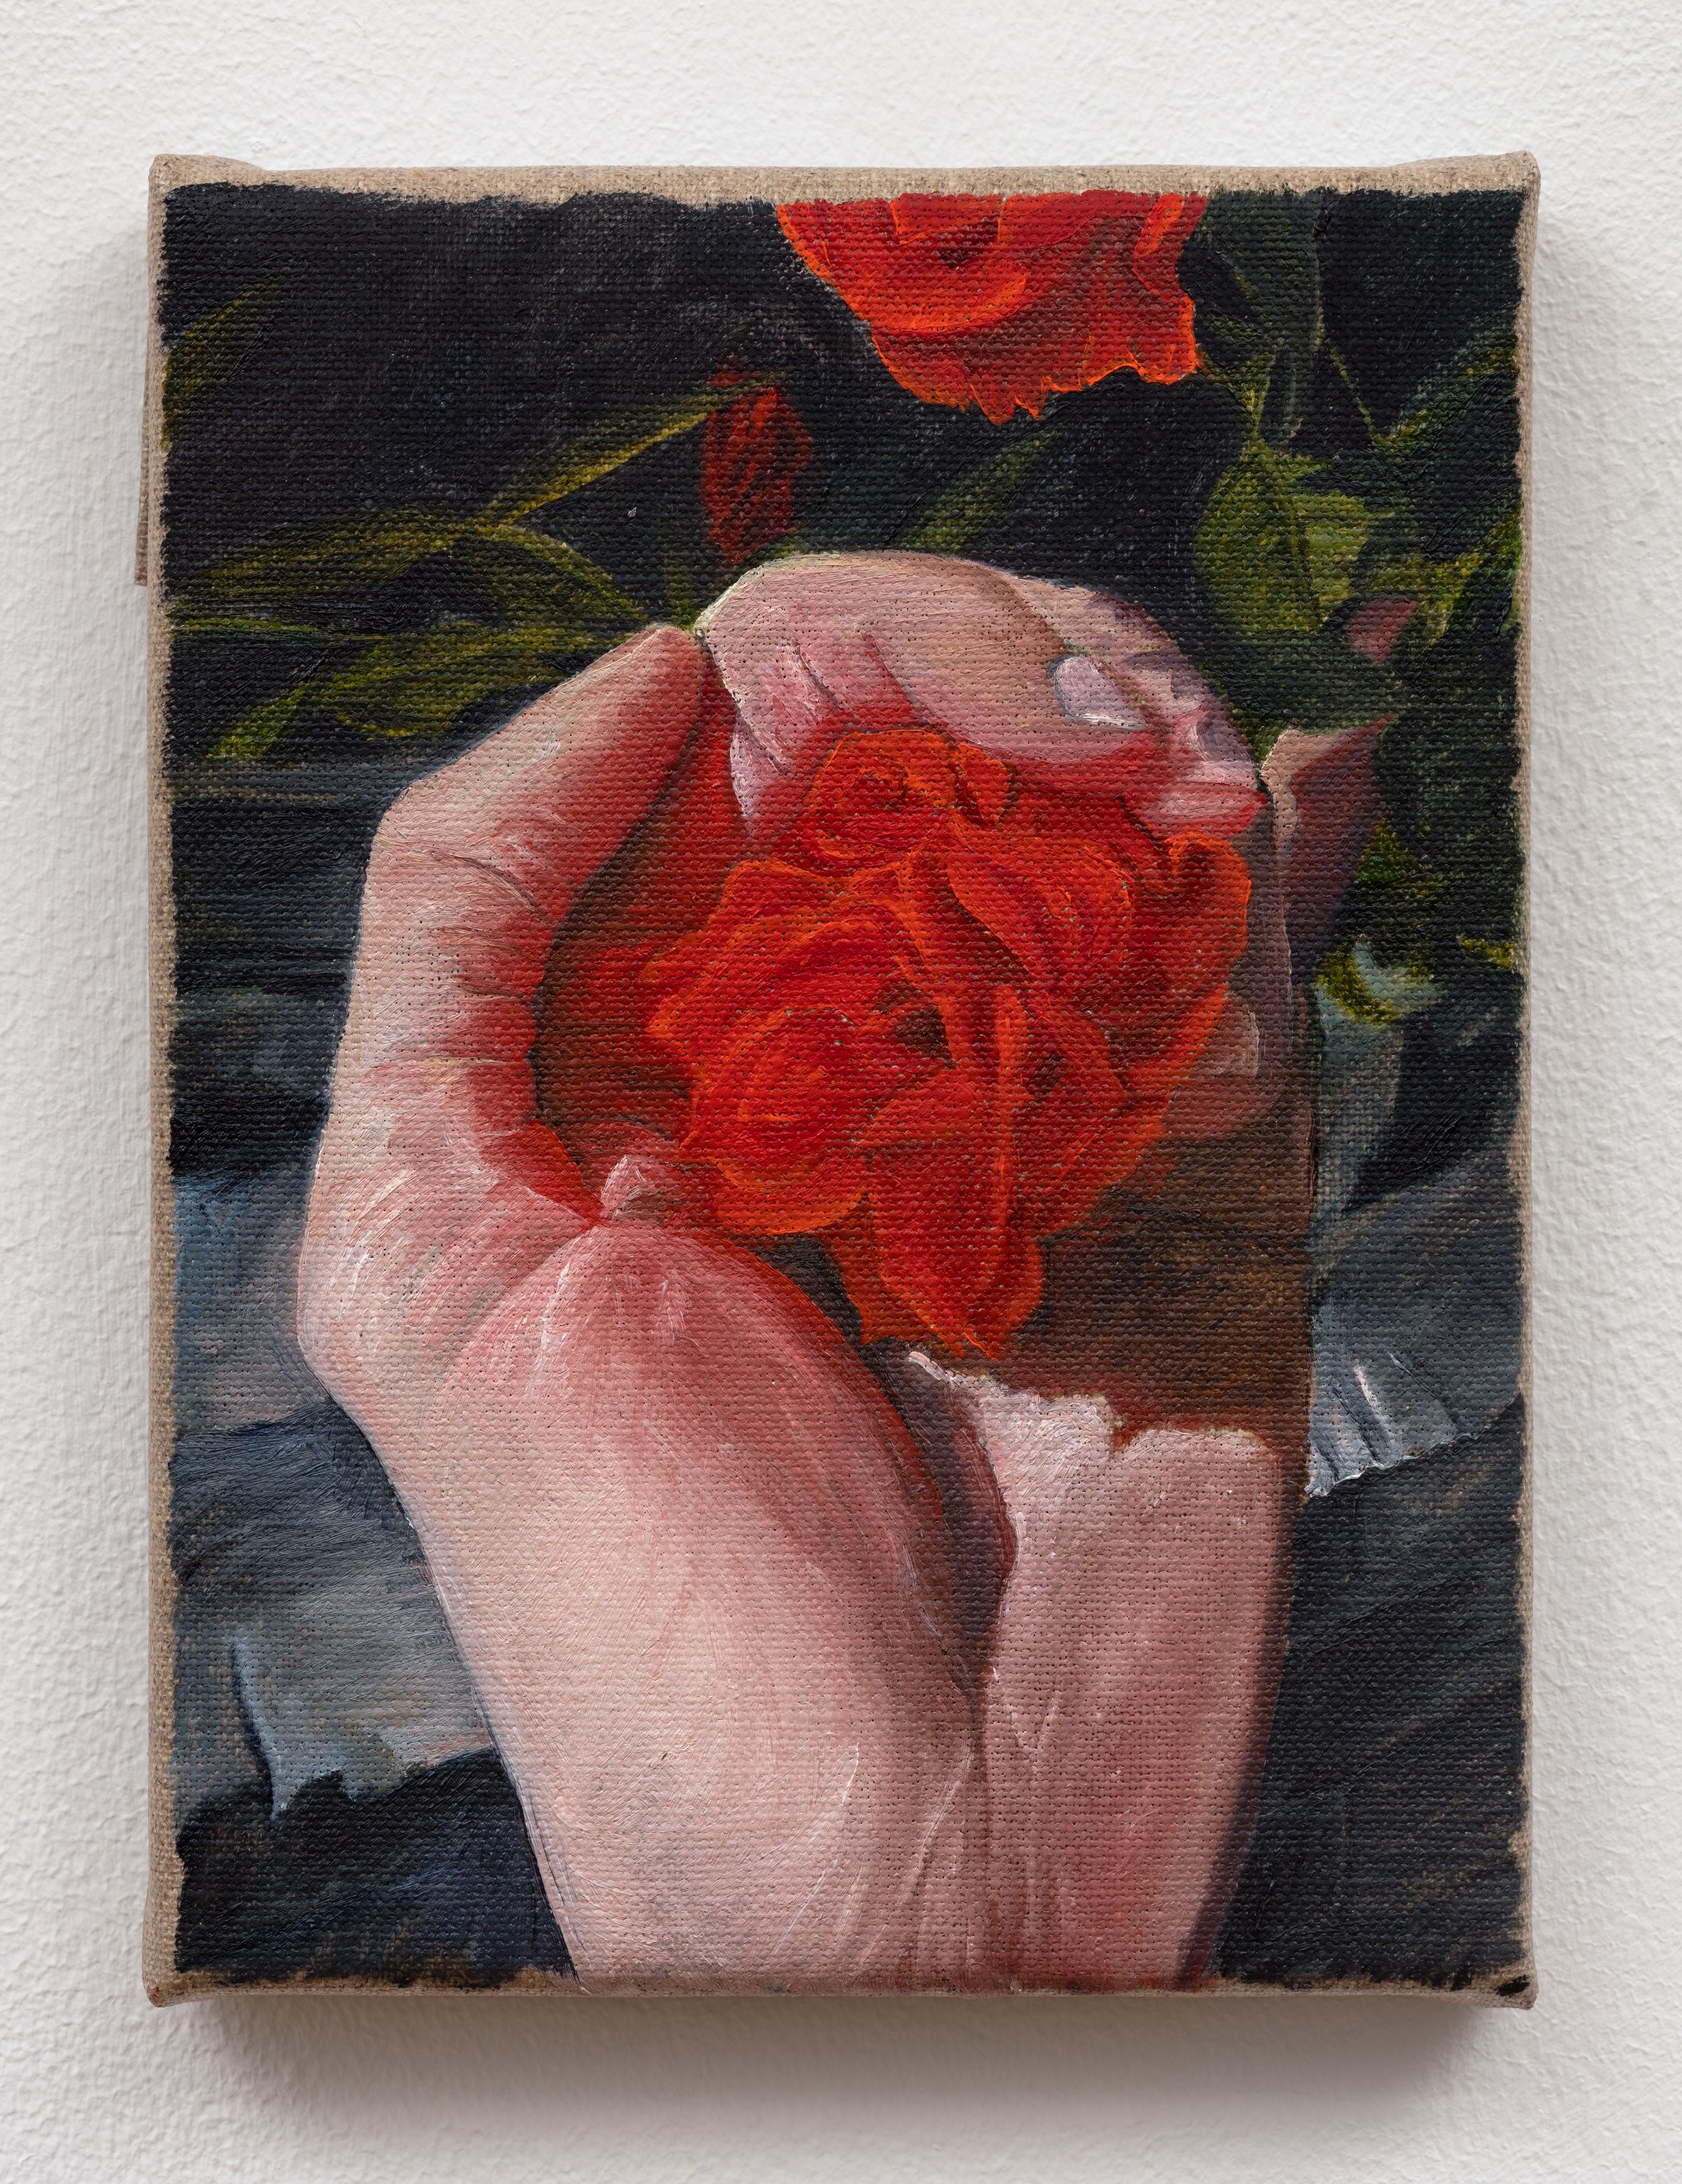 Srijon Chowdhury, Rose in Hand, 2020, oil on linen, 8 x 6 in. (20.32 x 15.24 cm)